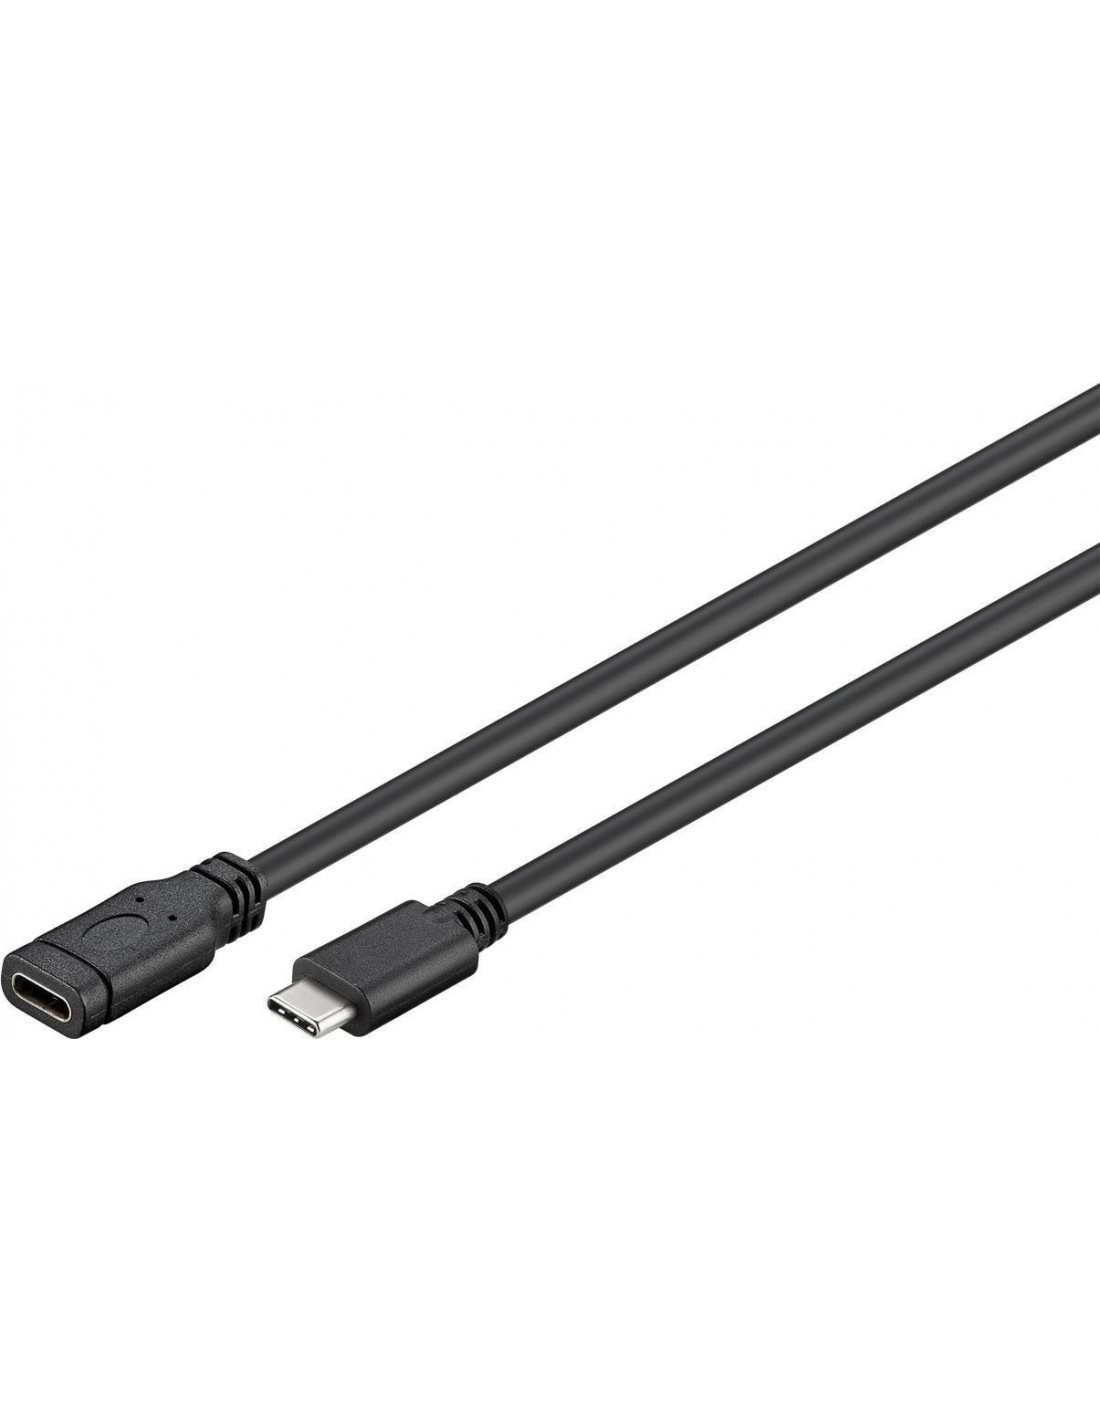 Cable USB-C rallonge Male Femelle 1m